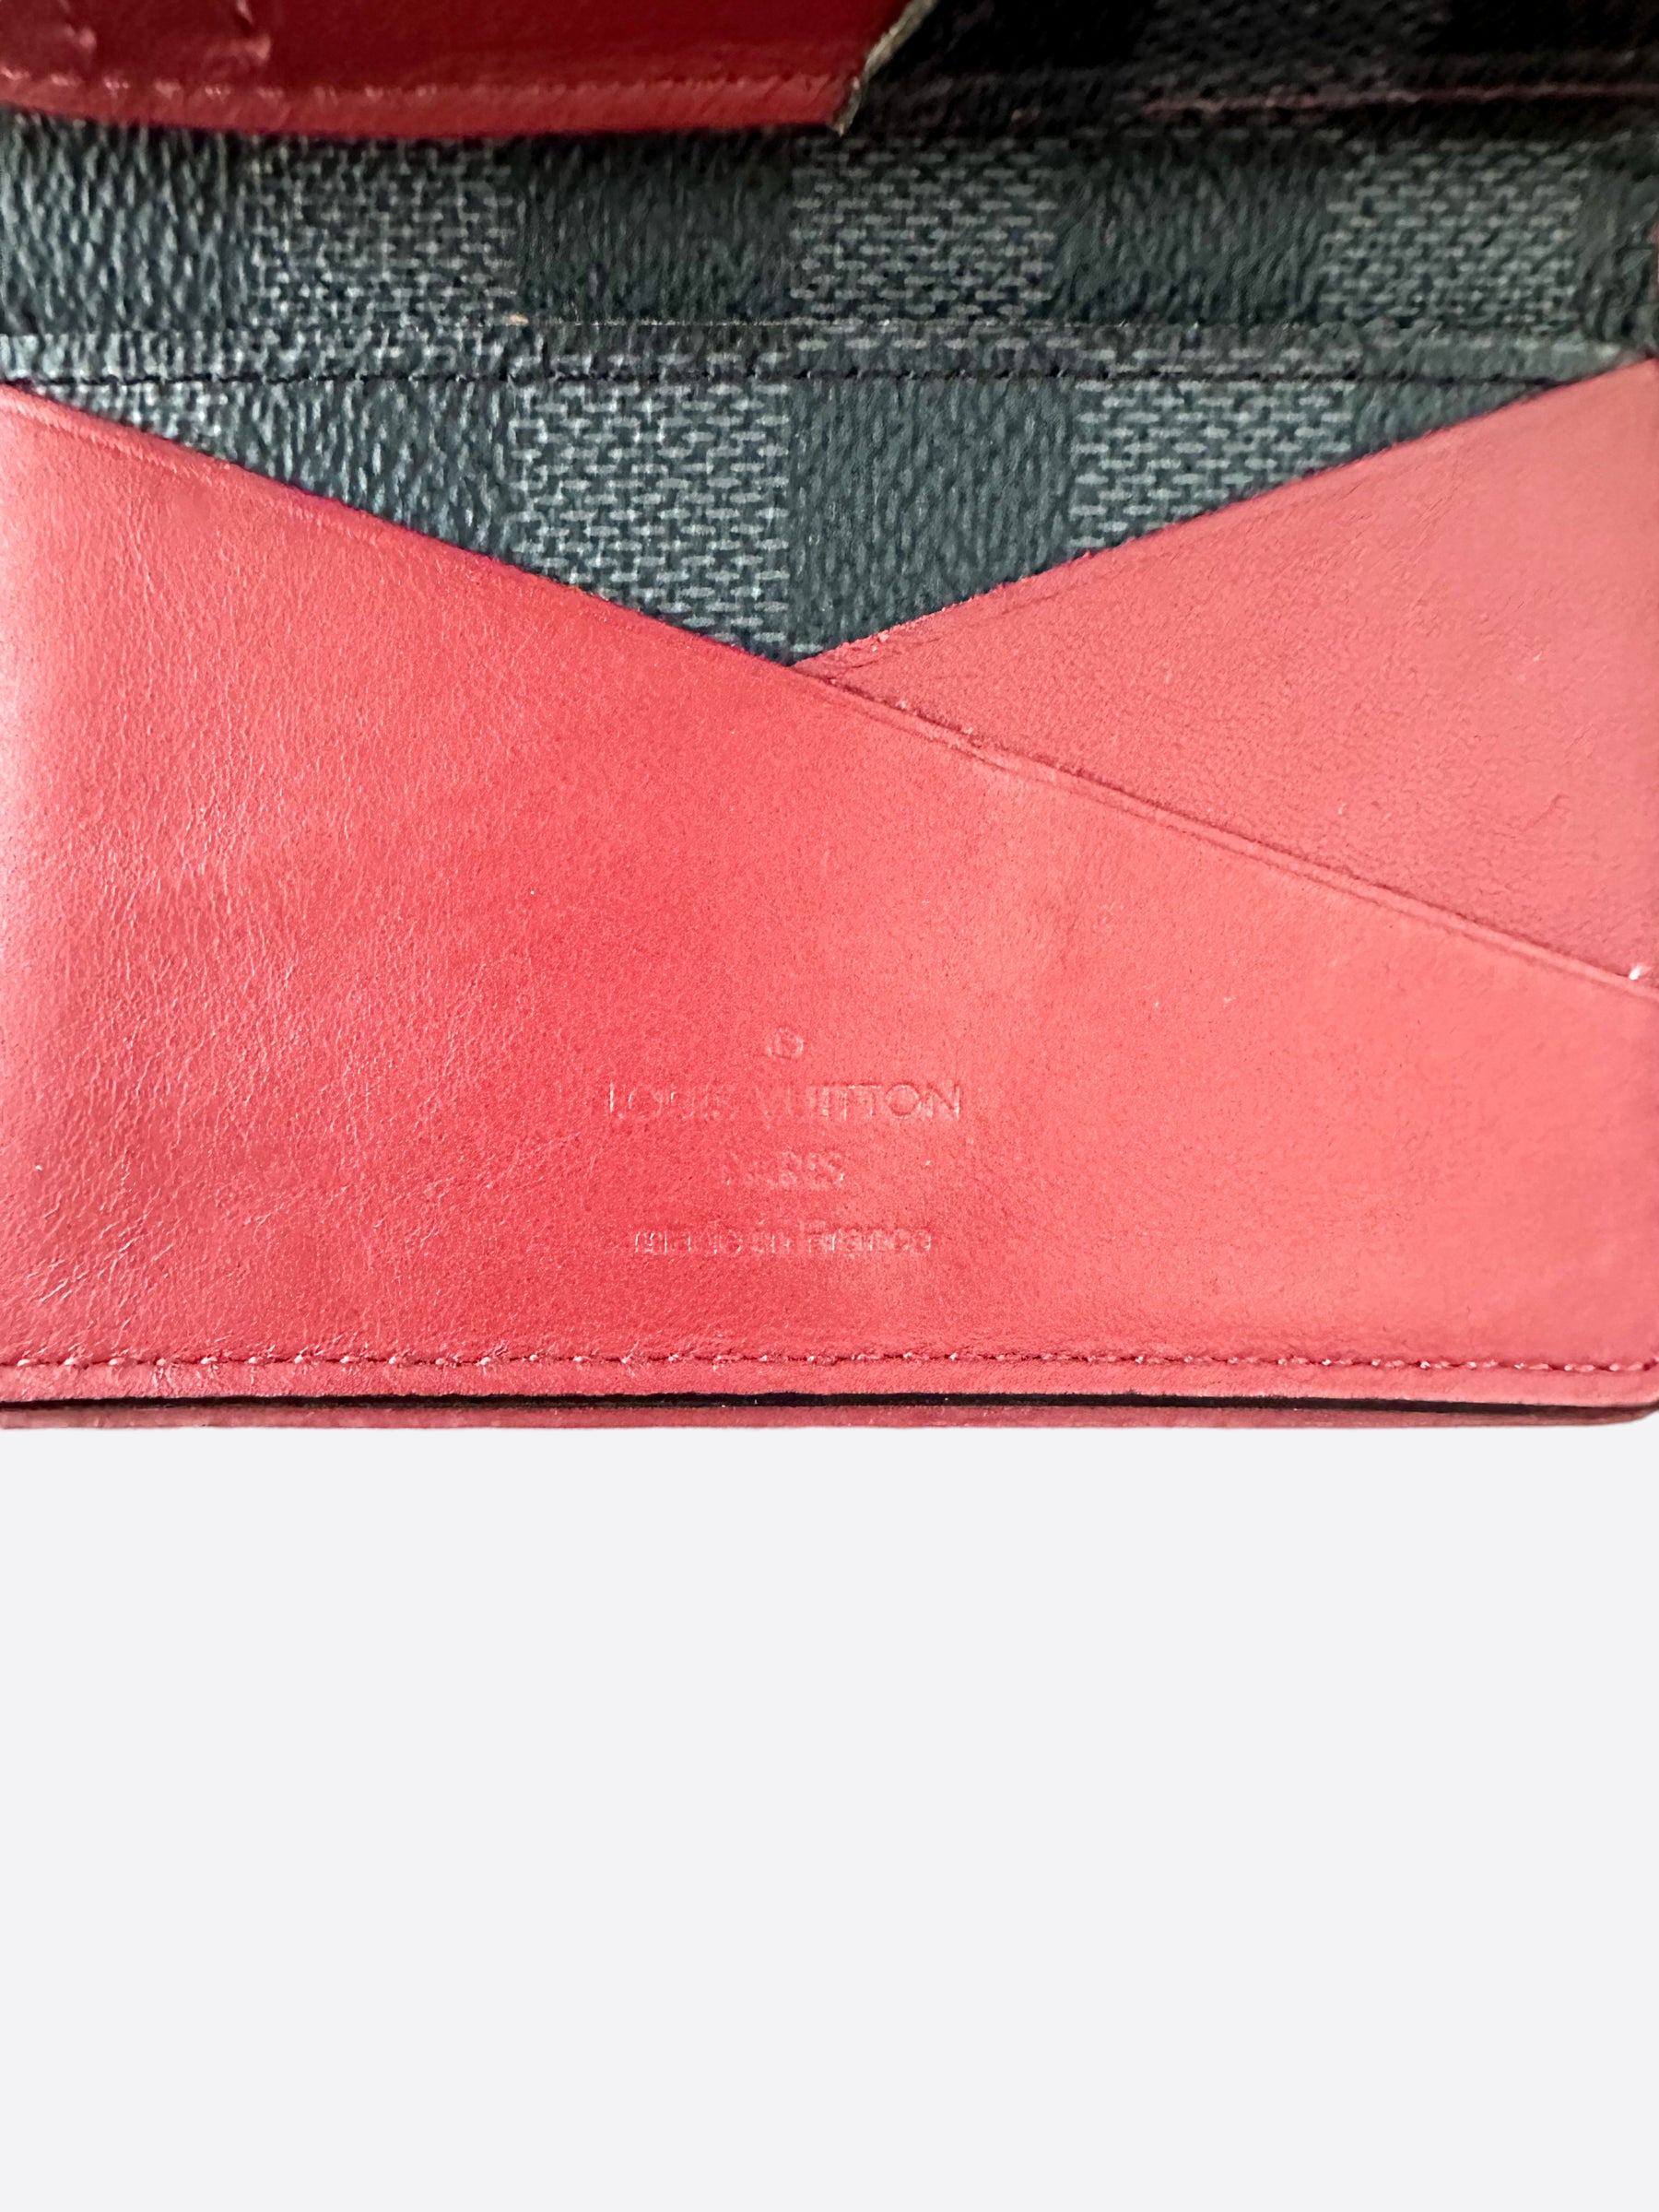 Louis Vuitton Damier Graphite and Red Pocket Organizer